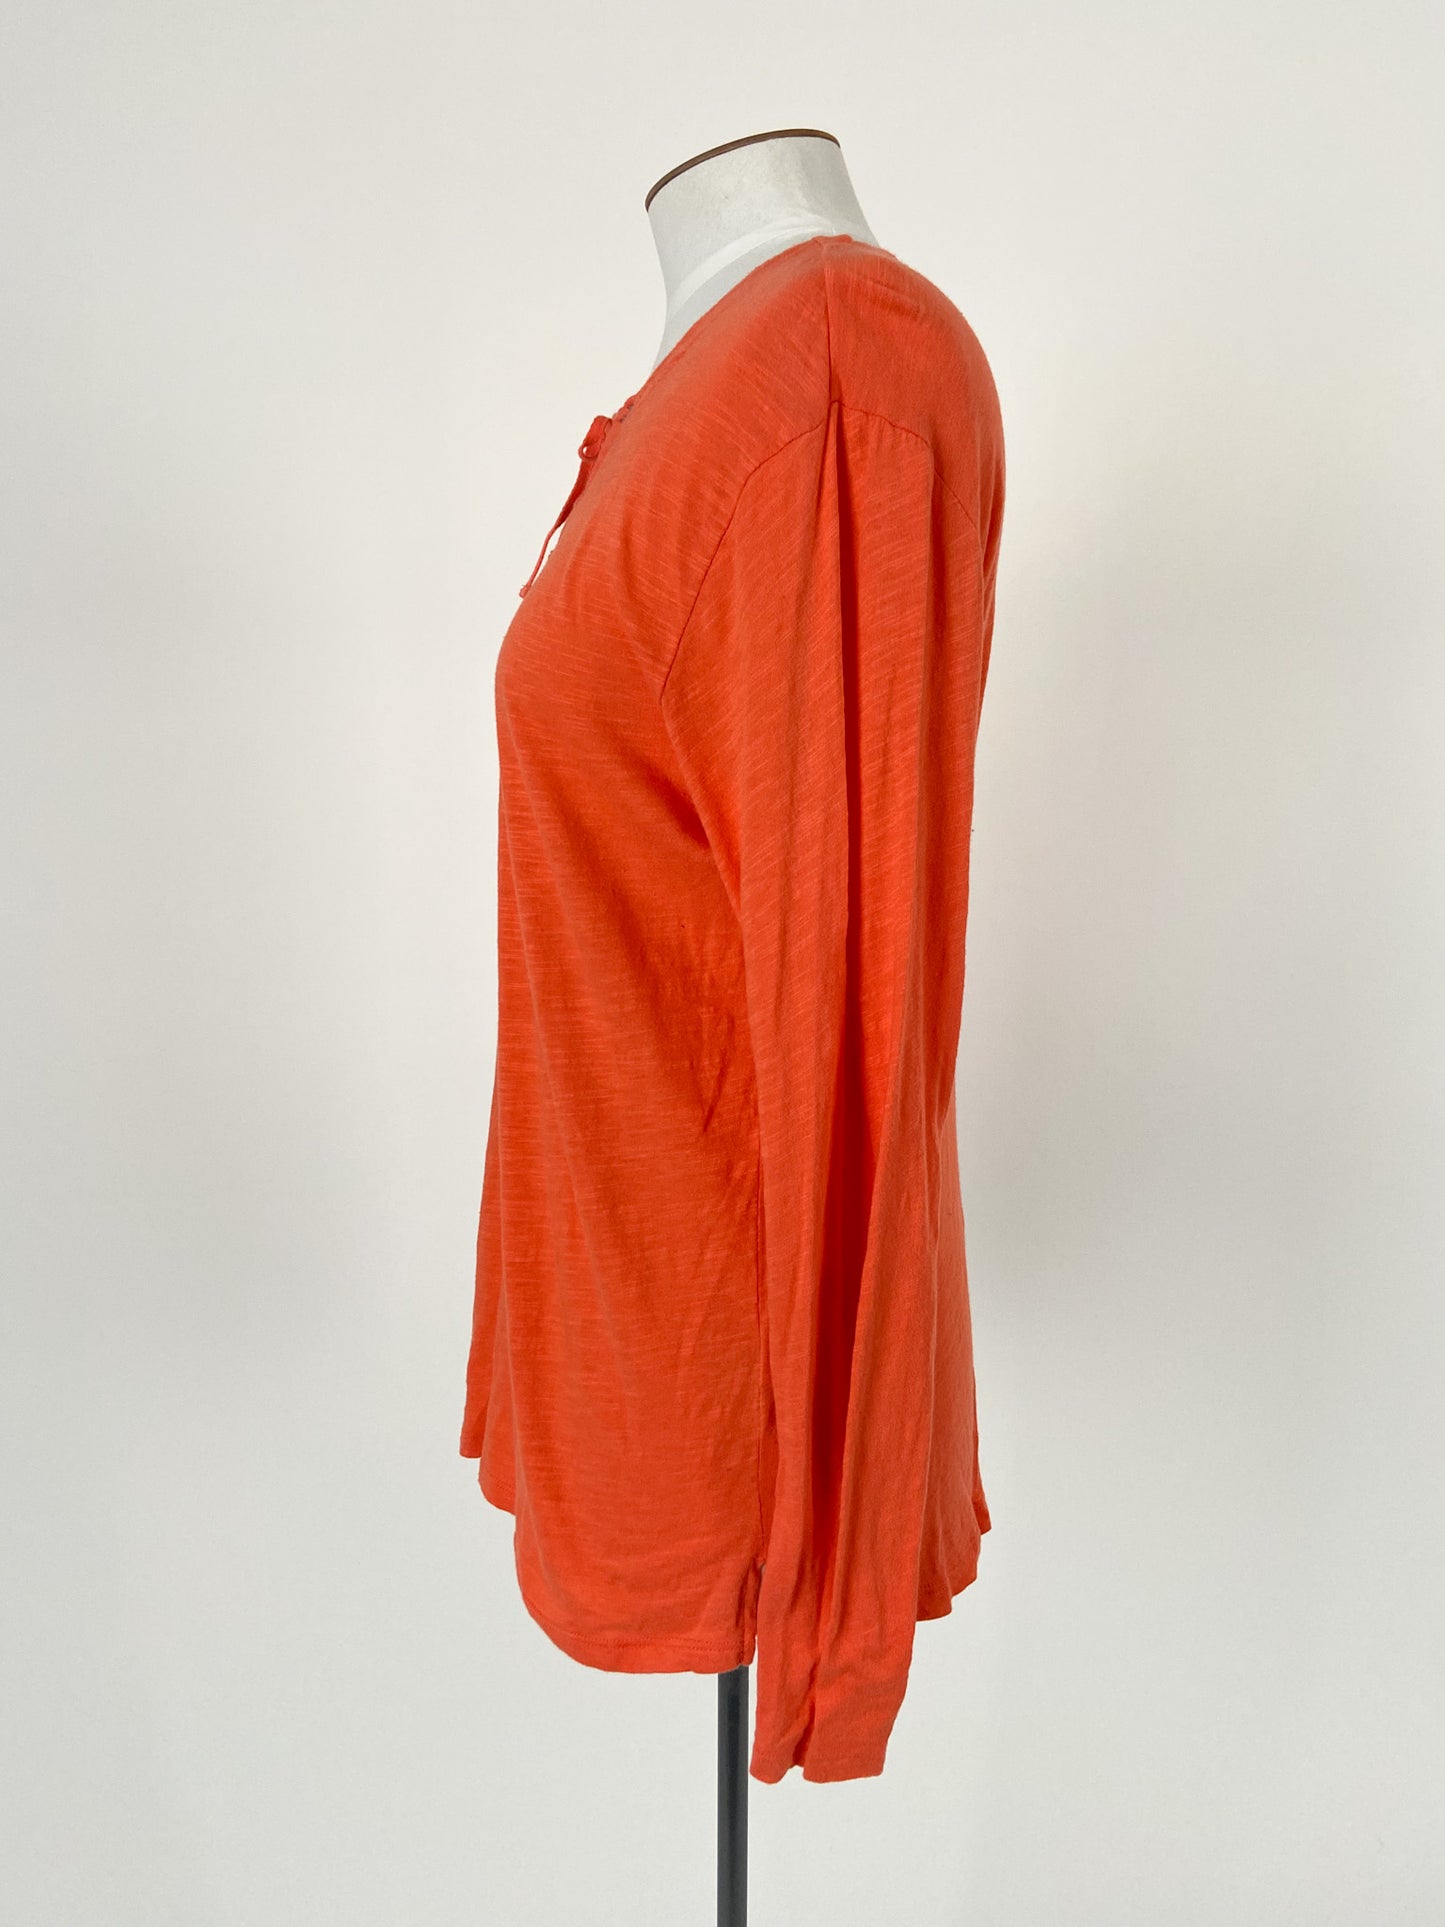 Memo Paris | Orange Casual/Workwear Top | Size L